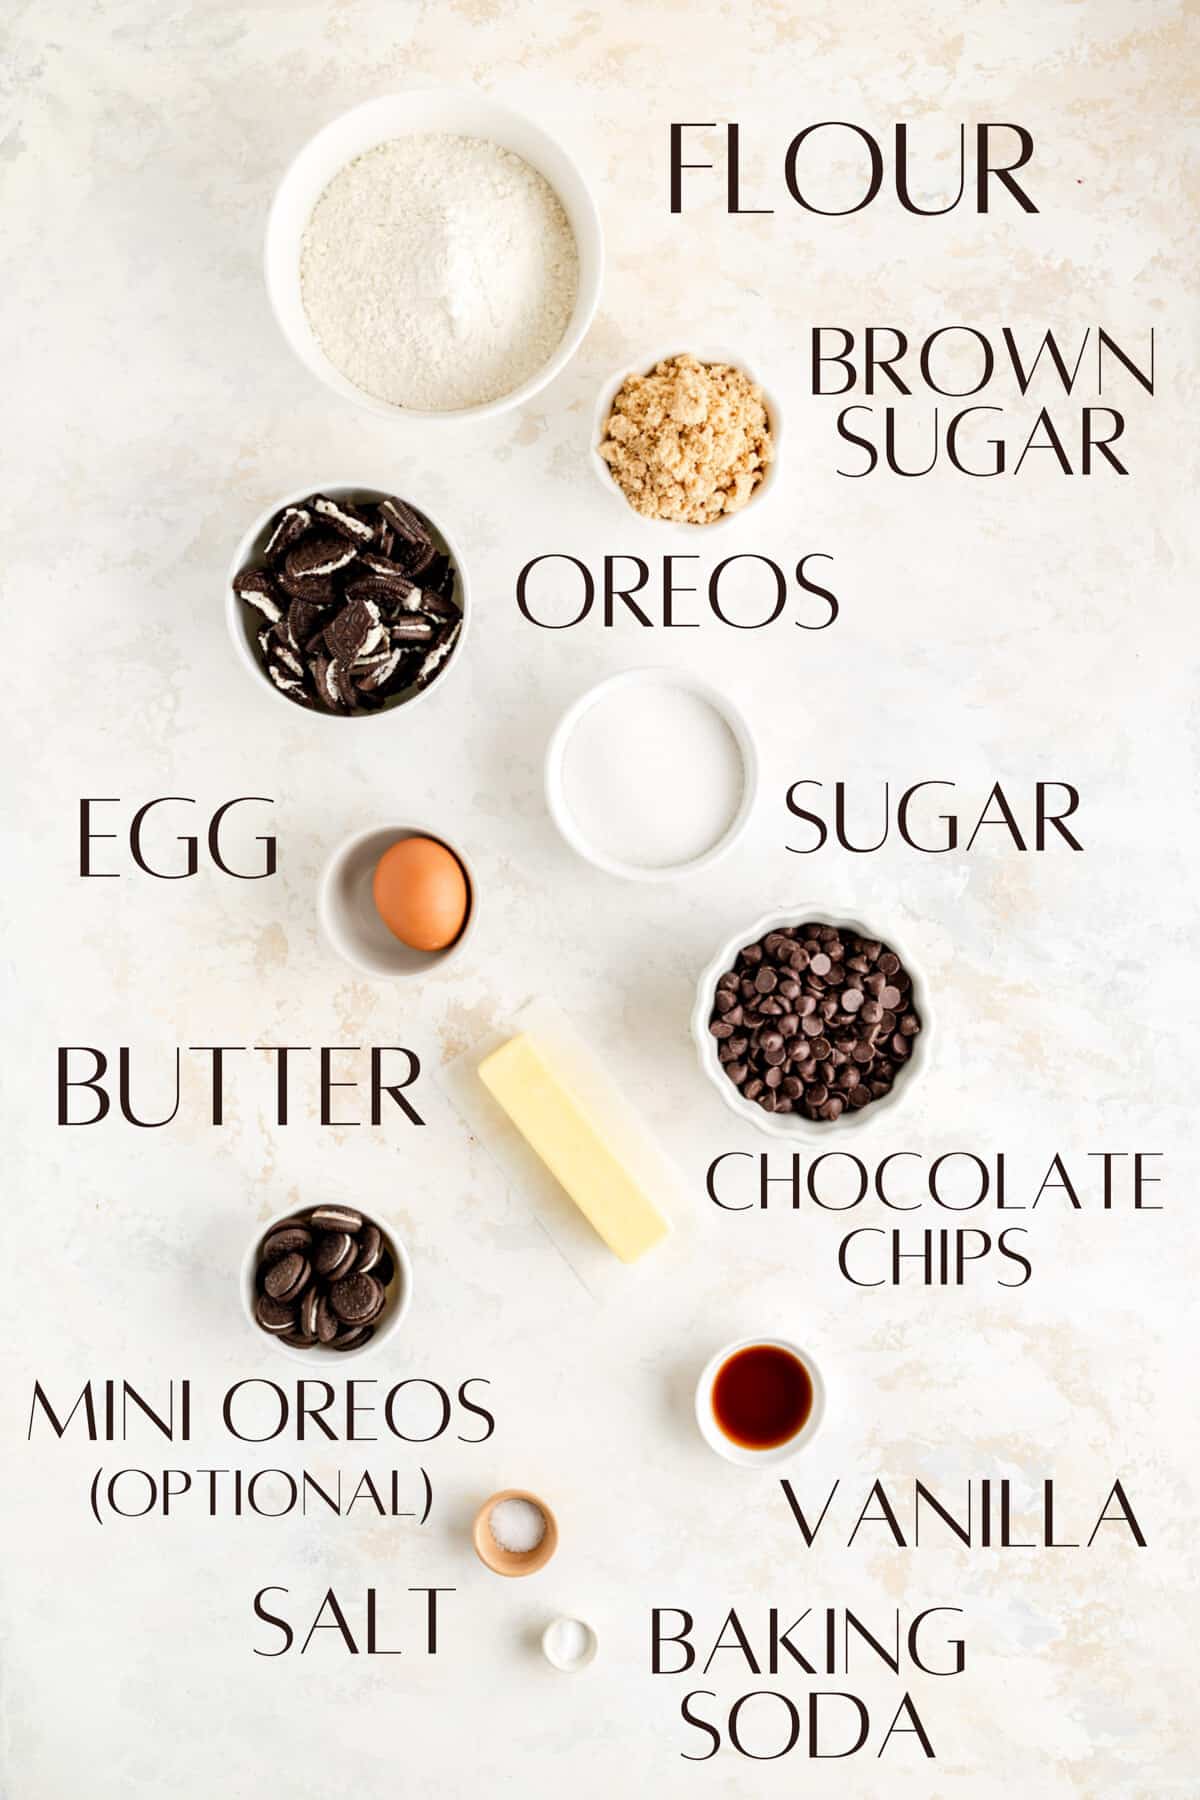 flour, brown sugar, oreos, sugar, egg, butter, chocolate chips, mini oreos, vanilla, salt, baking soda ingredients.